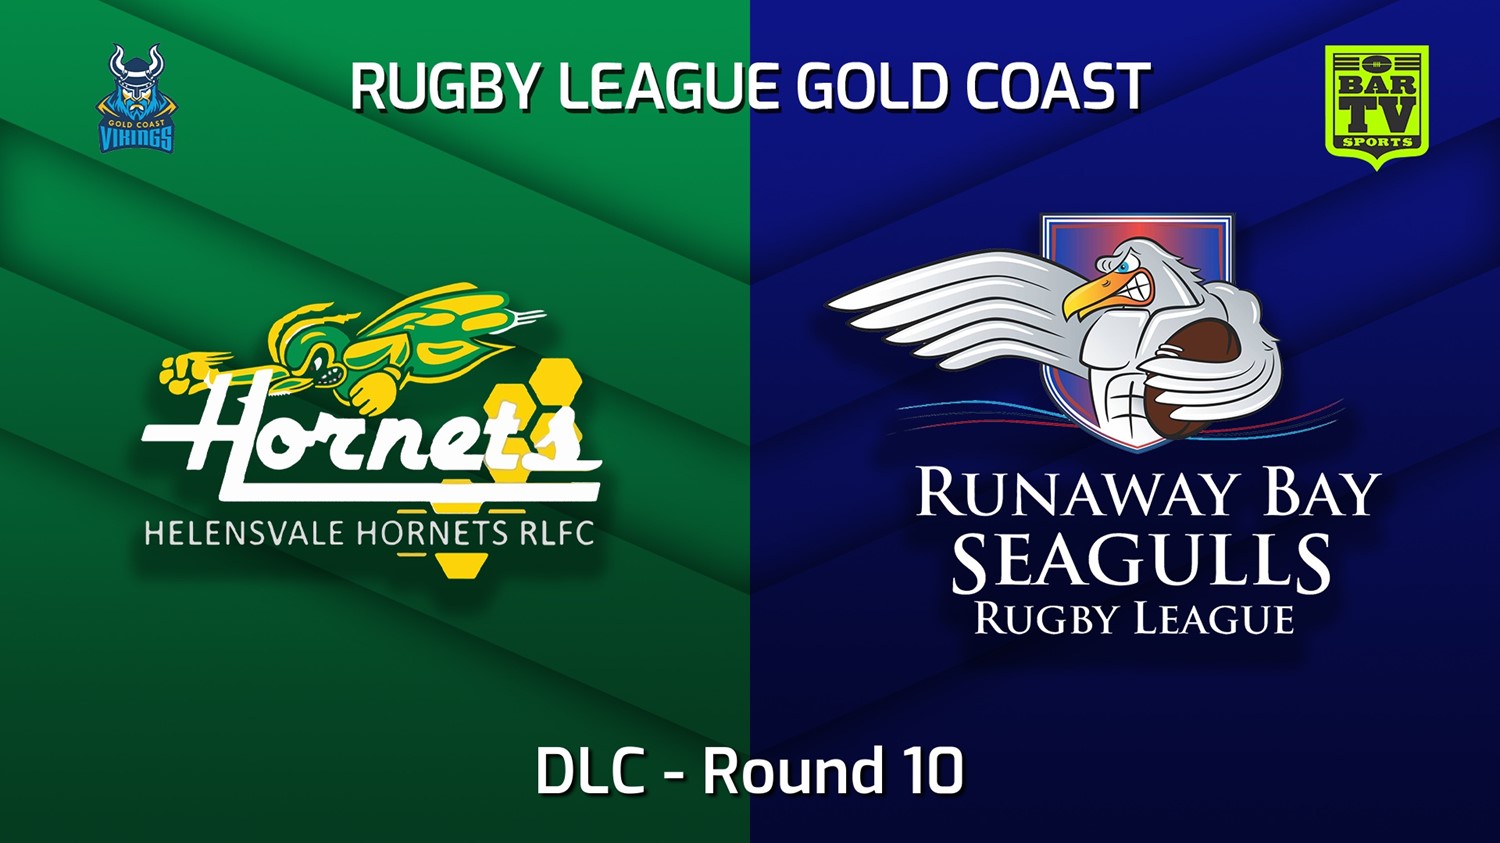 220612-Gold Coast Round 10 - DLC - Helensvale Hornets v Runaway Bay Seagulls Slate Image